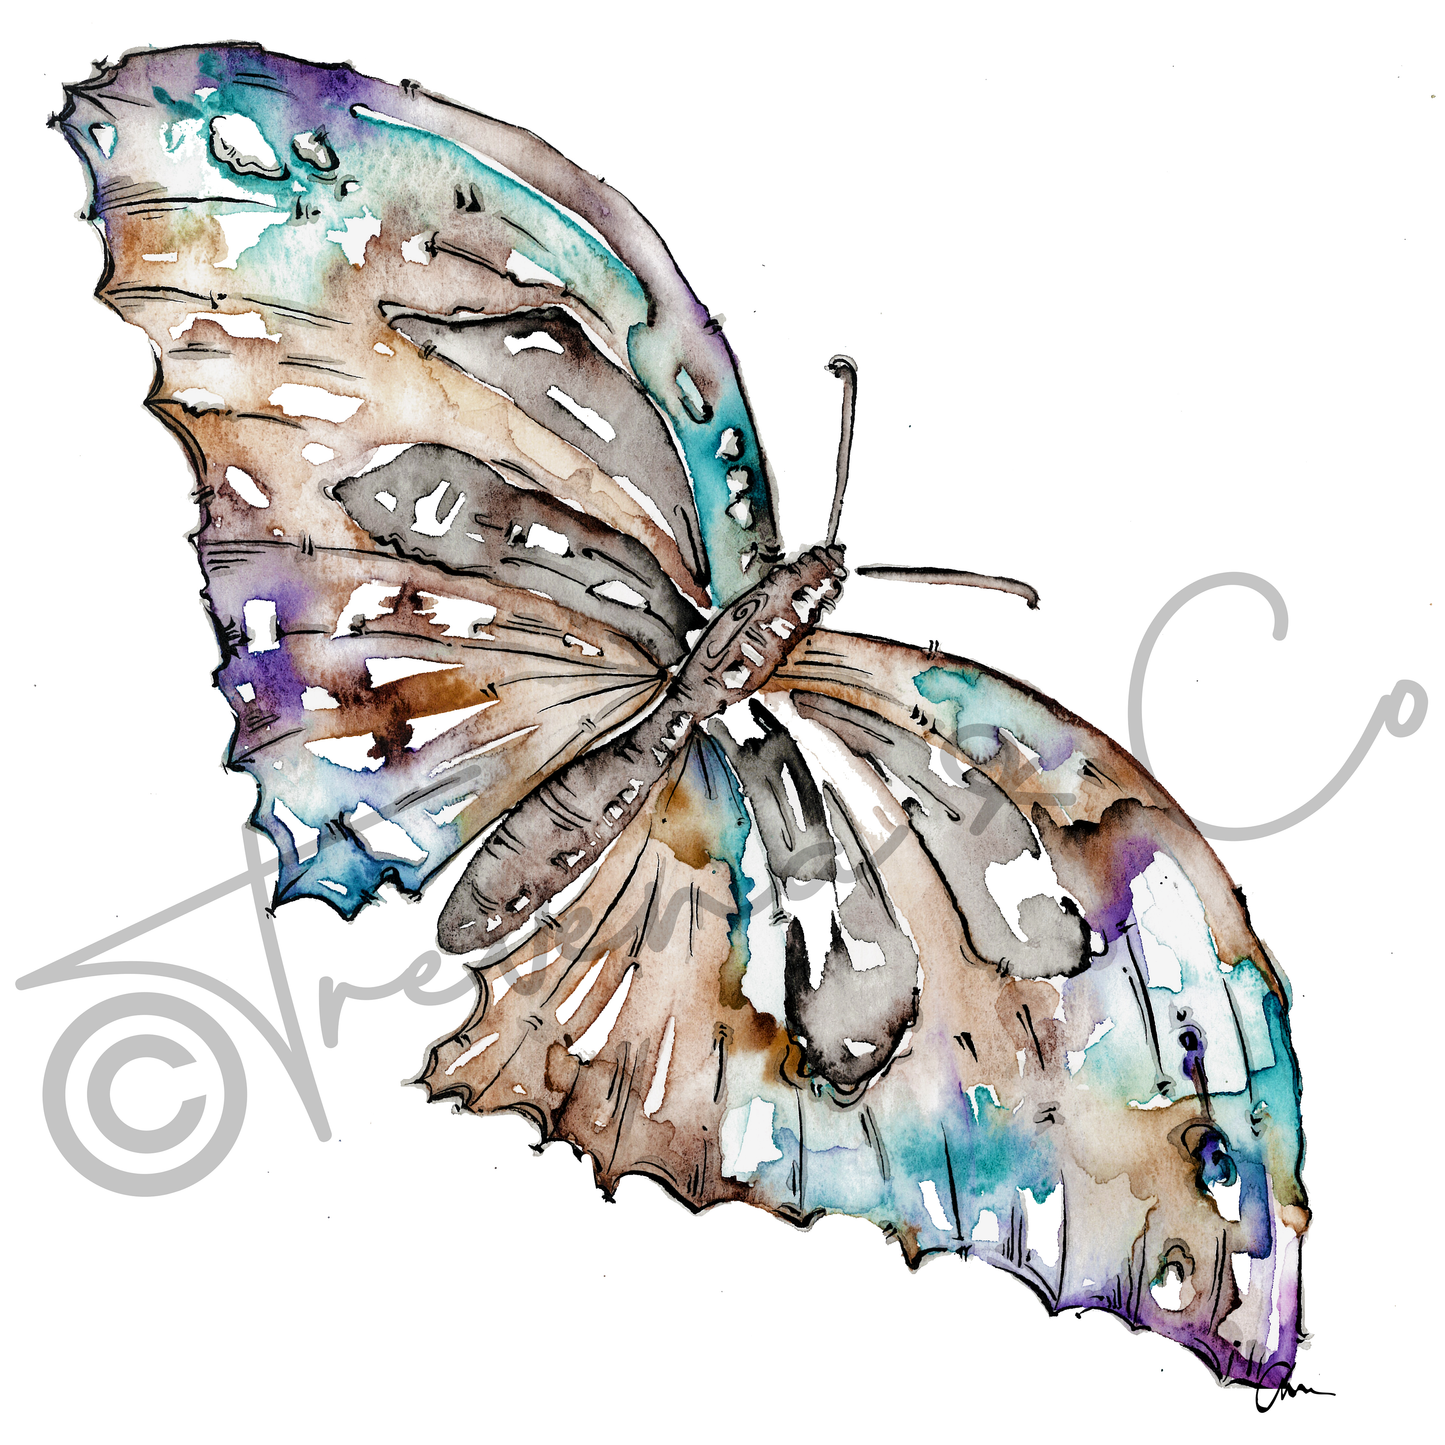 Butterfly Watercolour